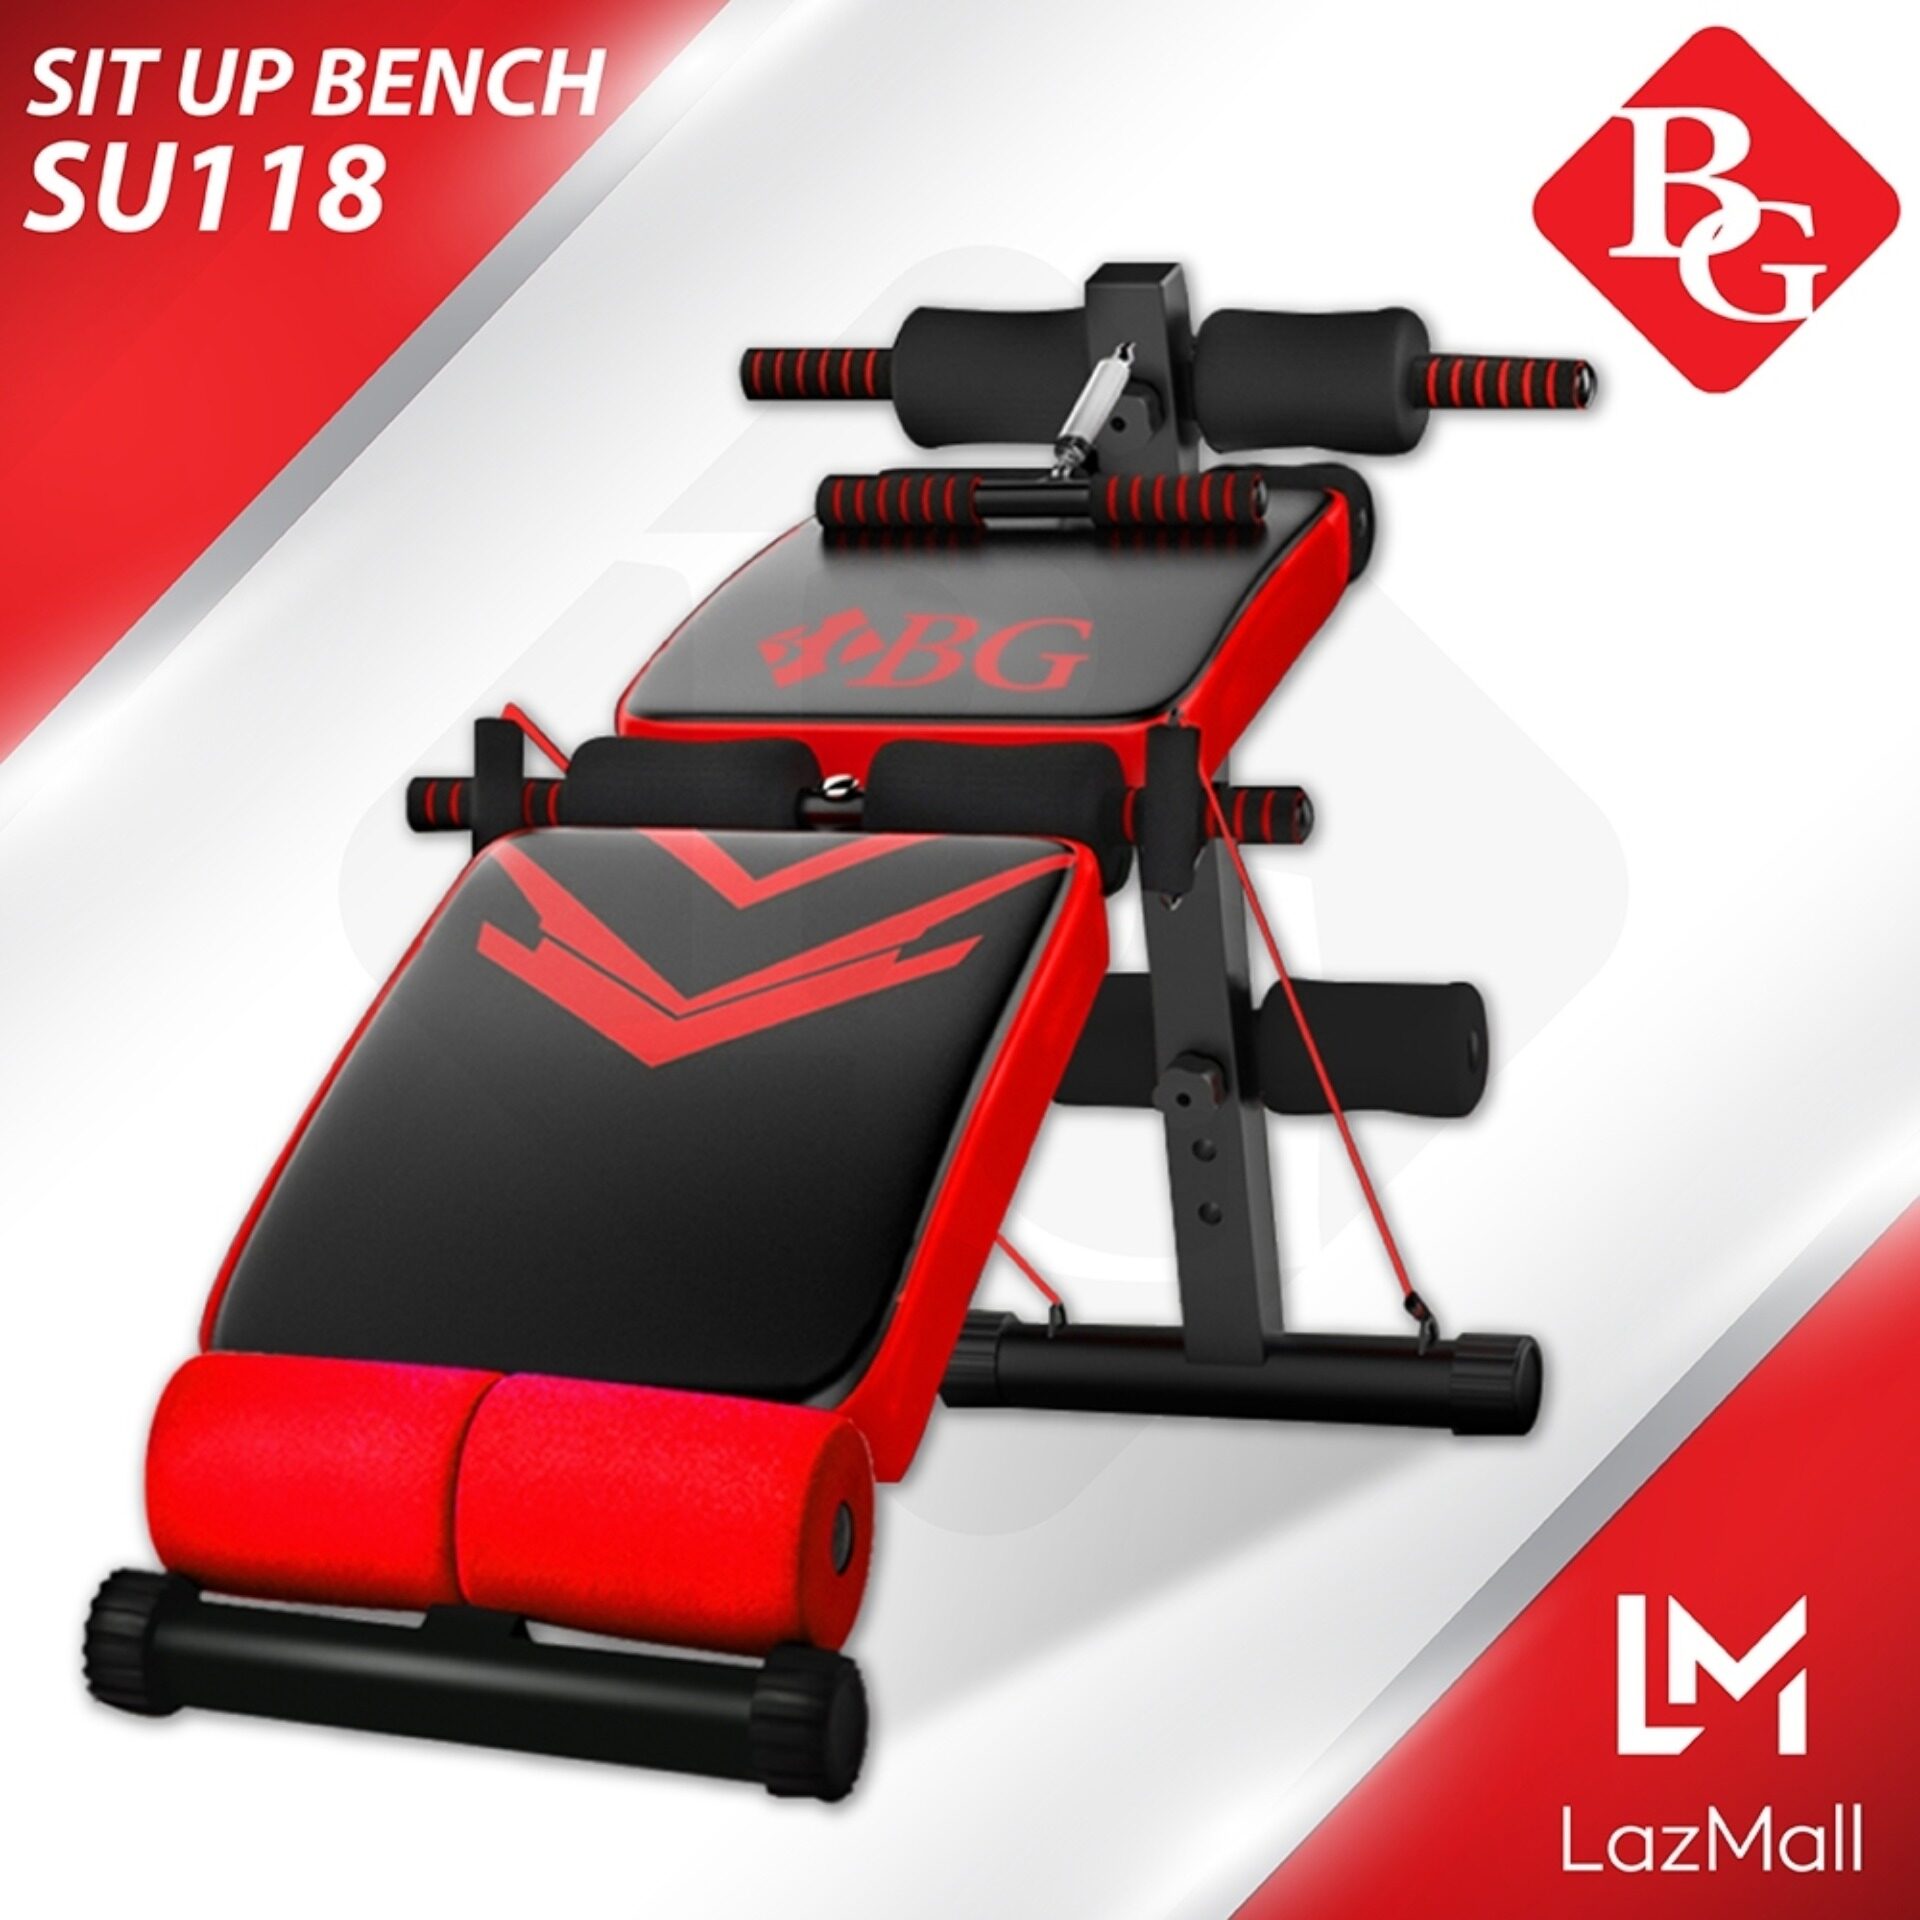 B&G เครื่องออกกำลังกาย ม้านั่ง ม้ายกดัมเบล เครื่องบริหารหน้าท้อง Multifunction Adjustable Fitness Gym Sit Up Bench (Red) รุ่น SU118